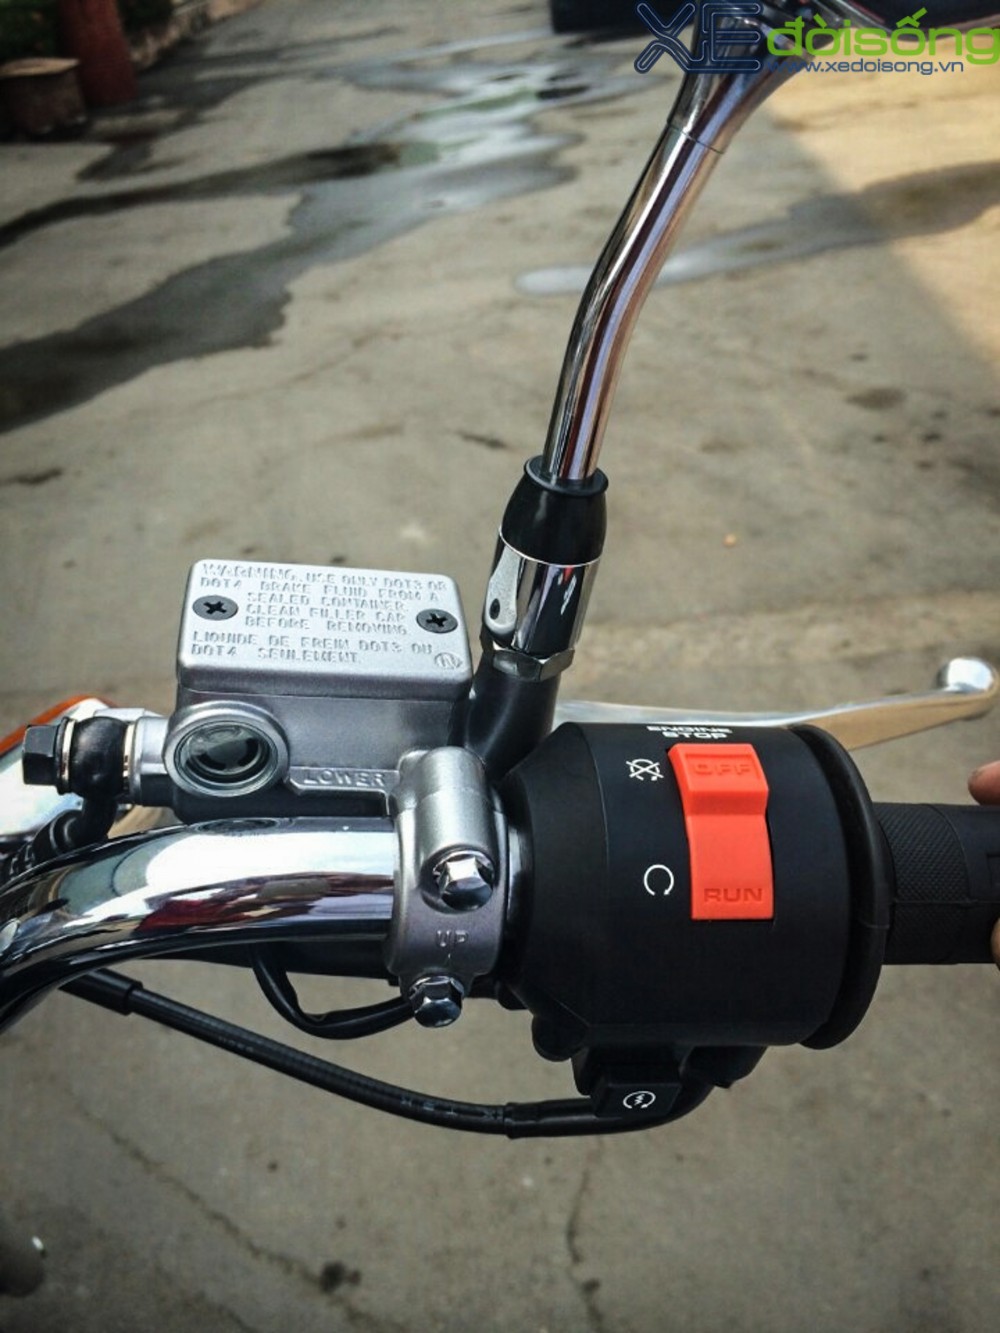 Hang hiem Honda Rebel 250 2015 bat ngo xuat hien tai Ha Noi - 4